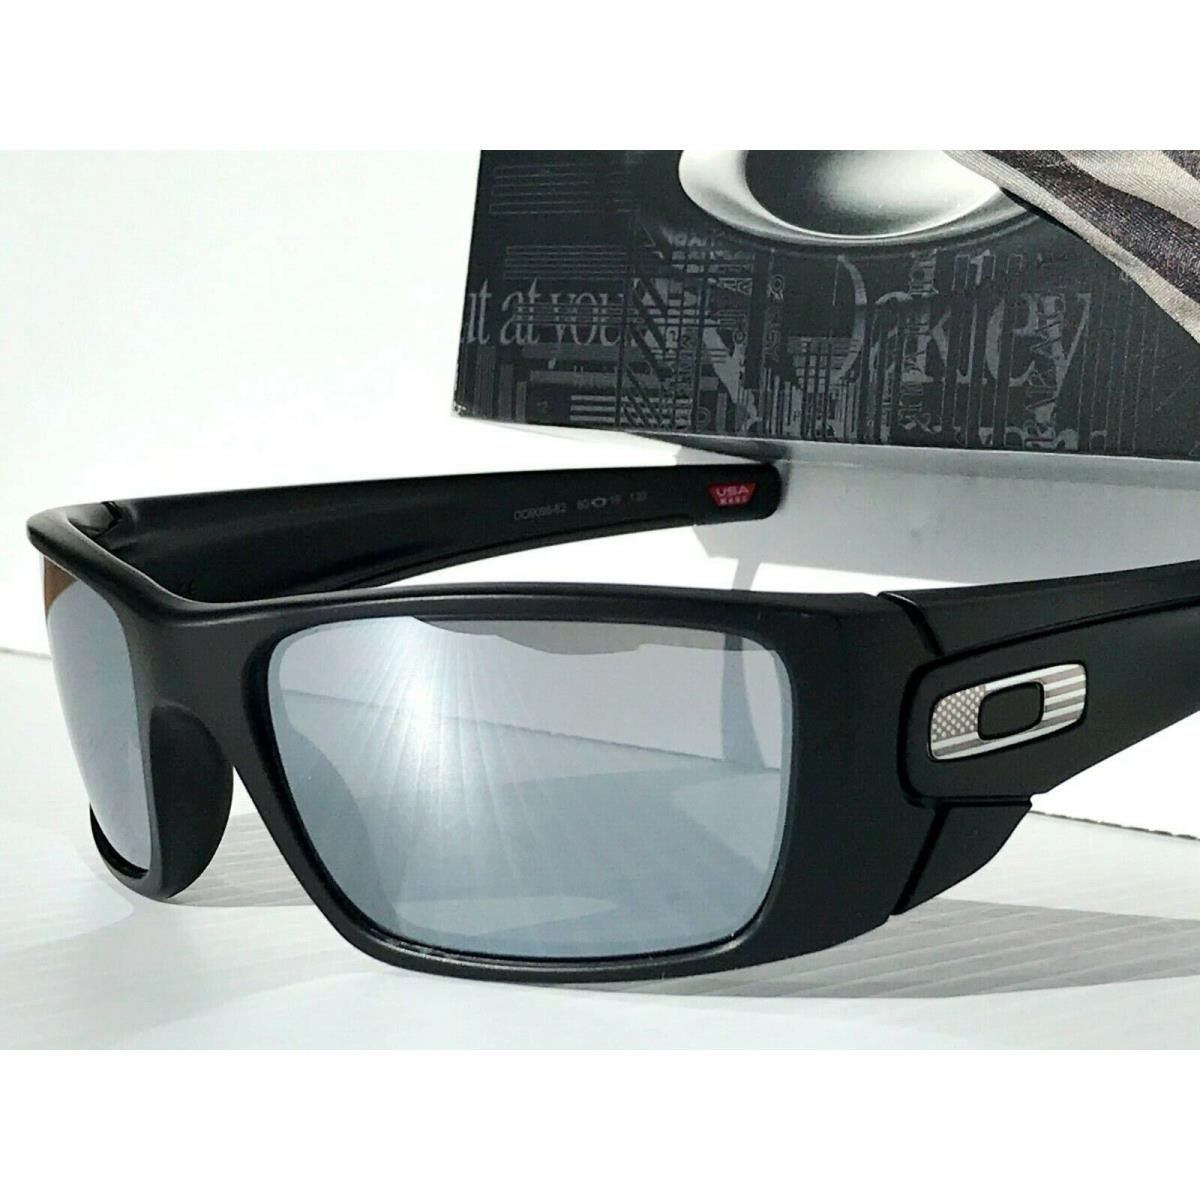 Oakley sunglasses Fuel Cell - Black Frame, Silver Lens 1